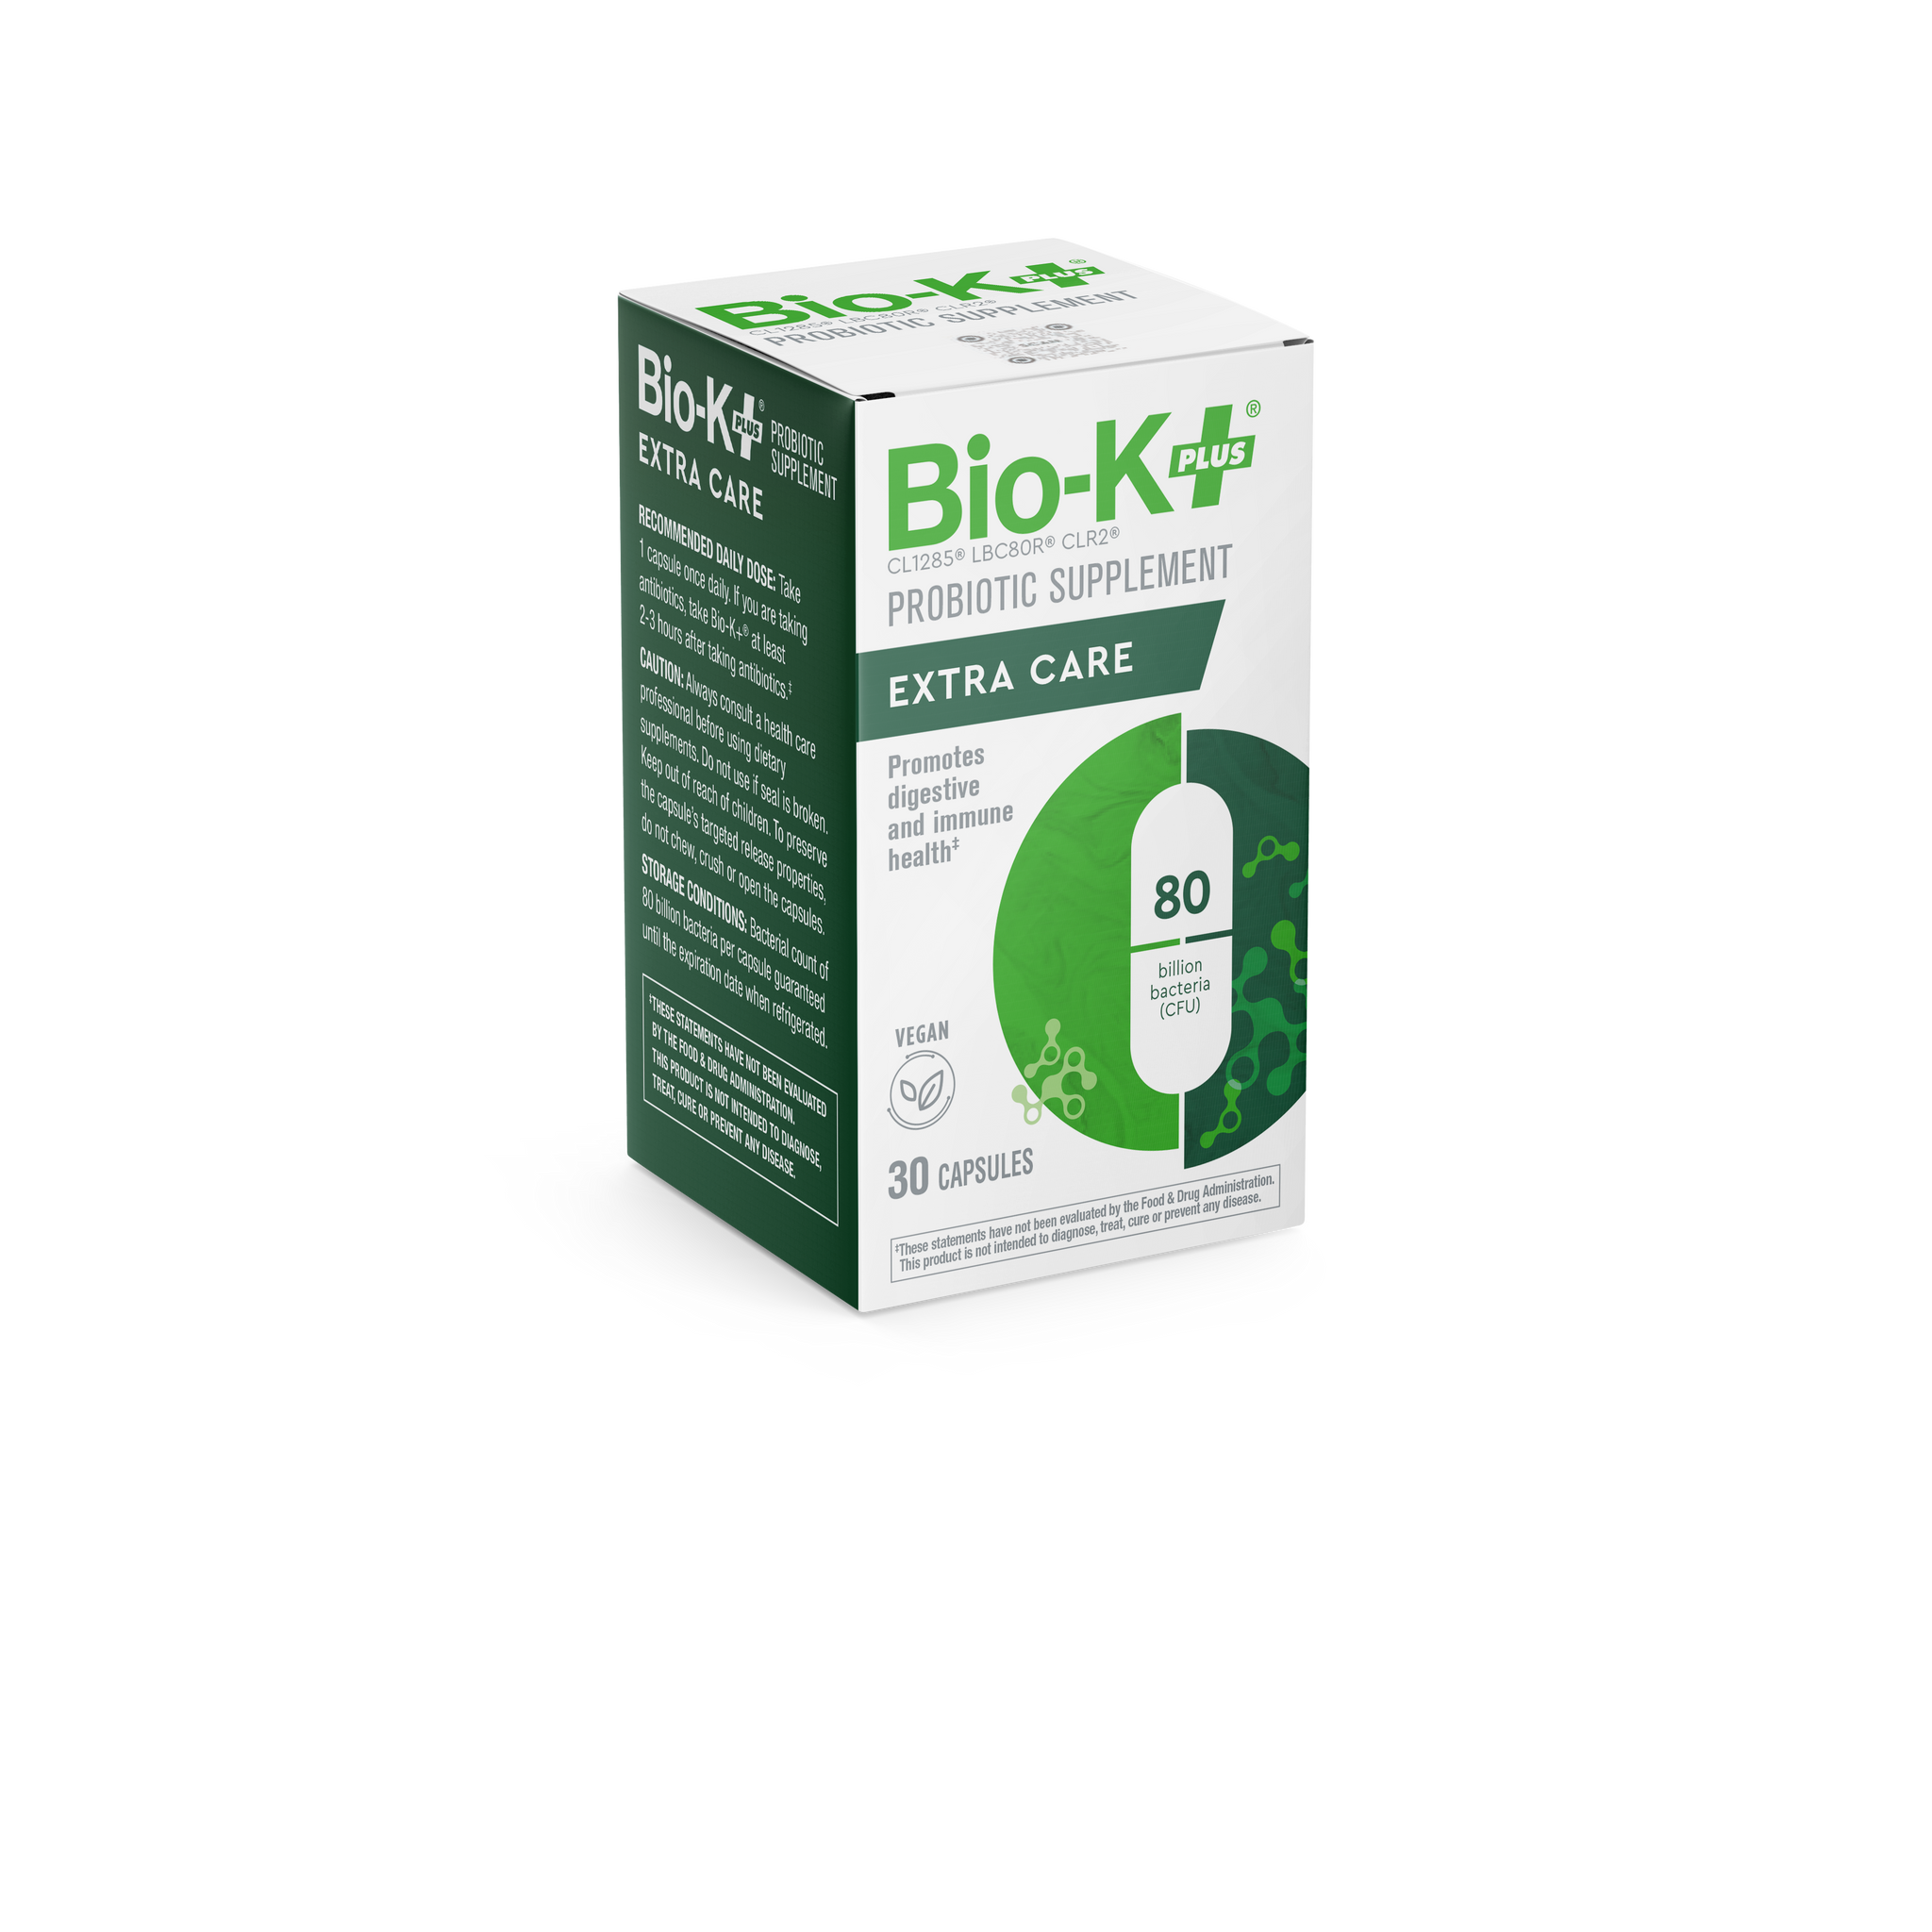 Daily Care+ 80 Billion VEGAN PROBIOTIC CAPSULES Boxe - Bio-K+